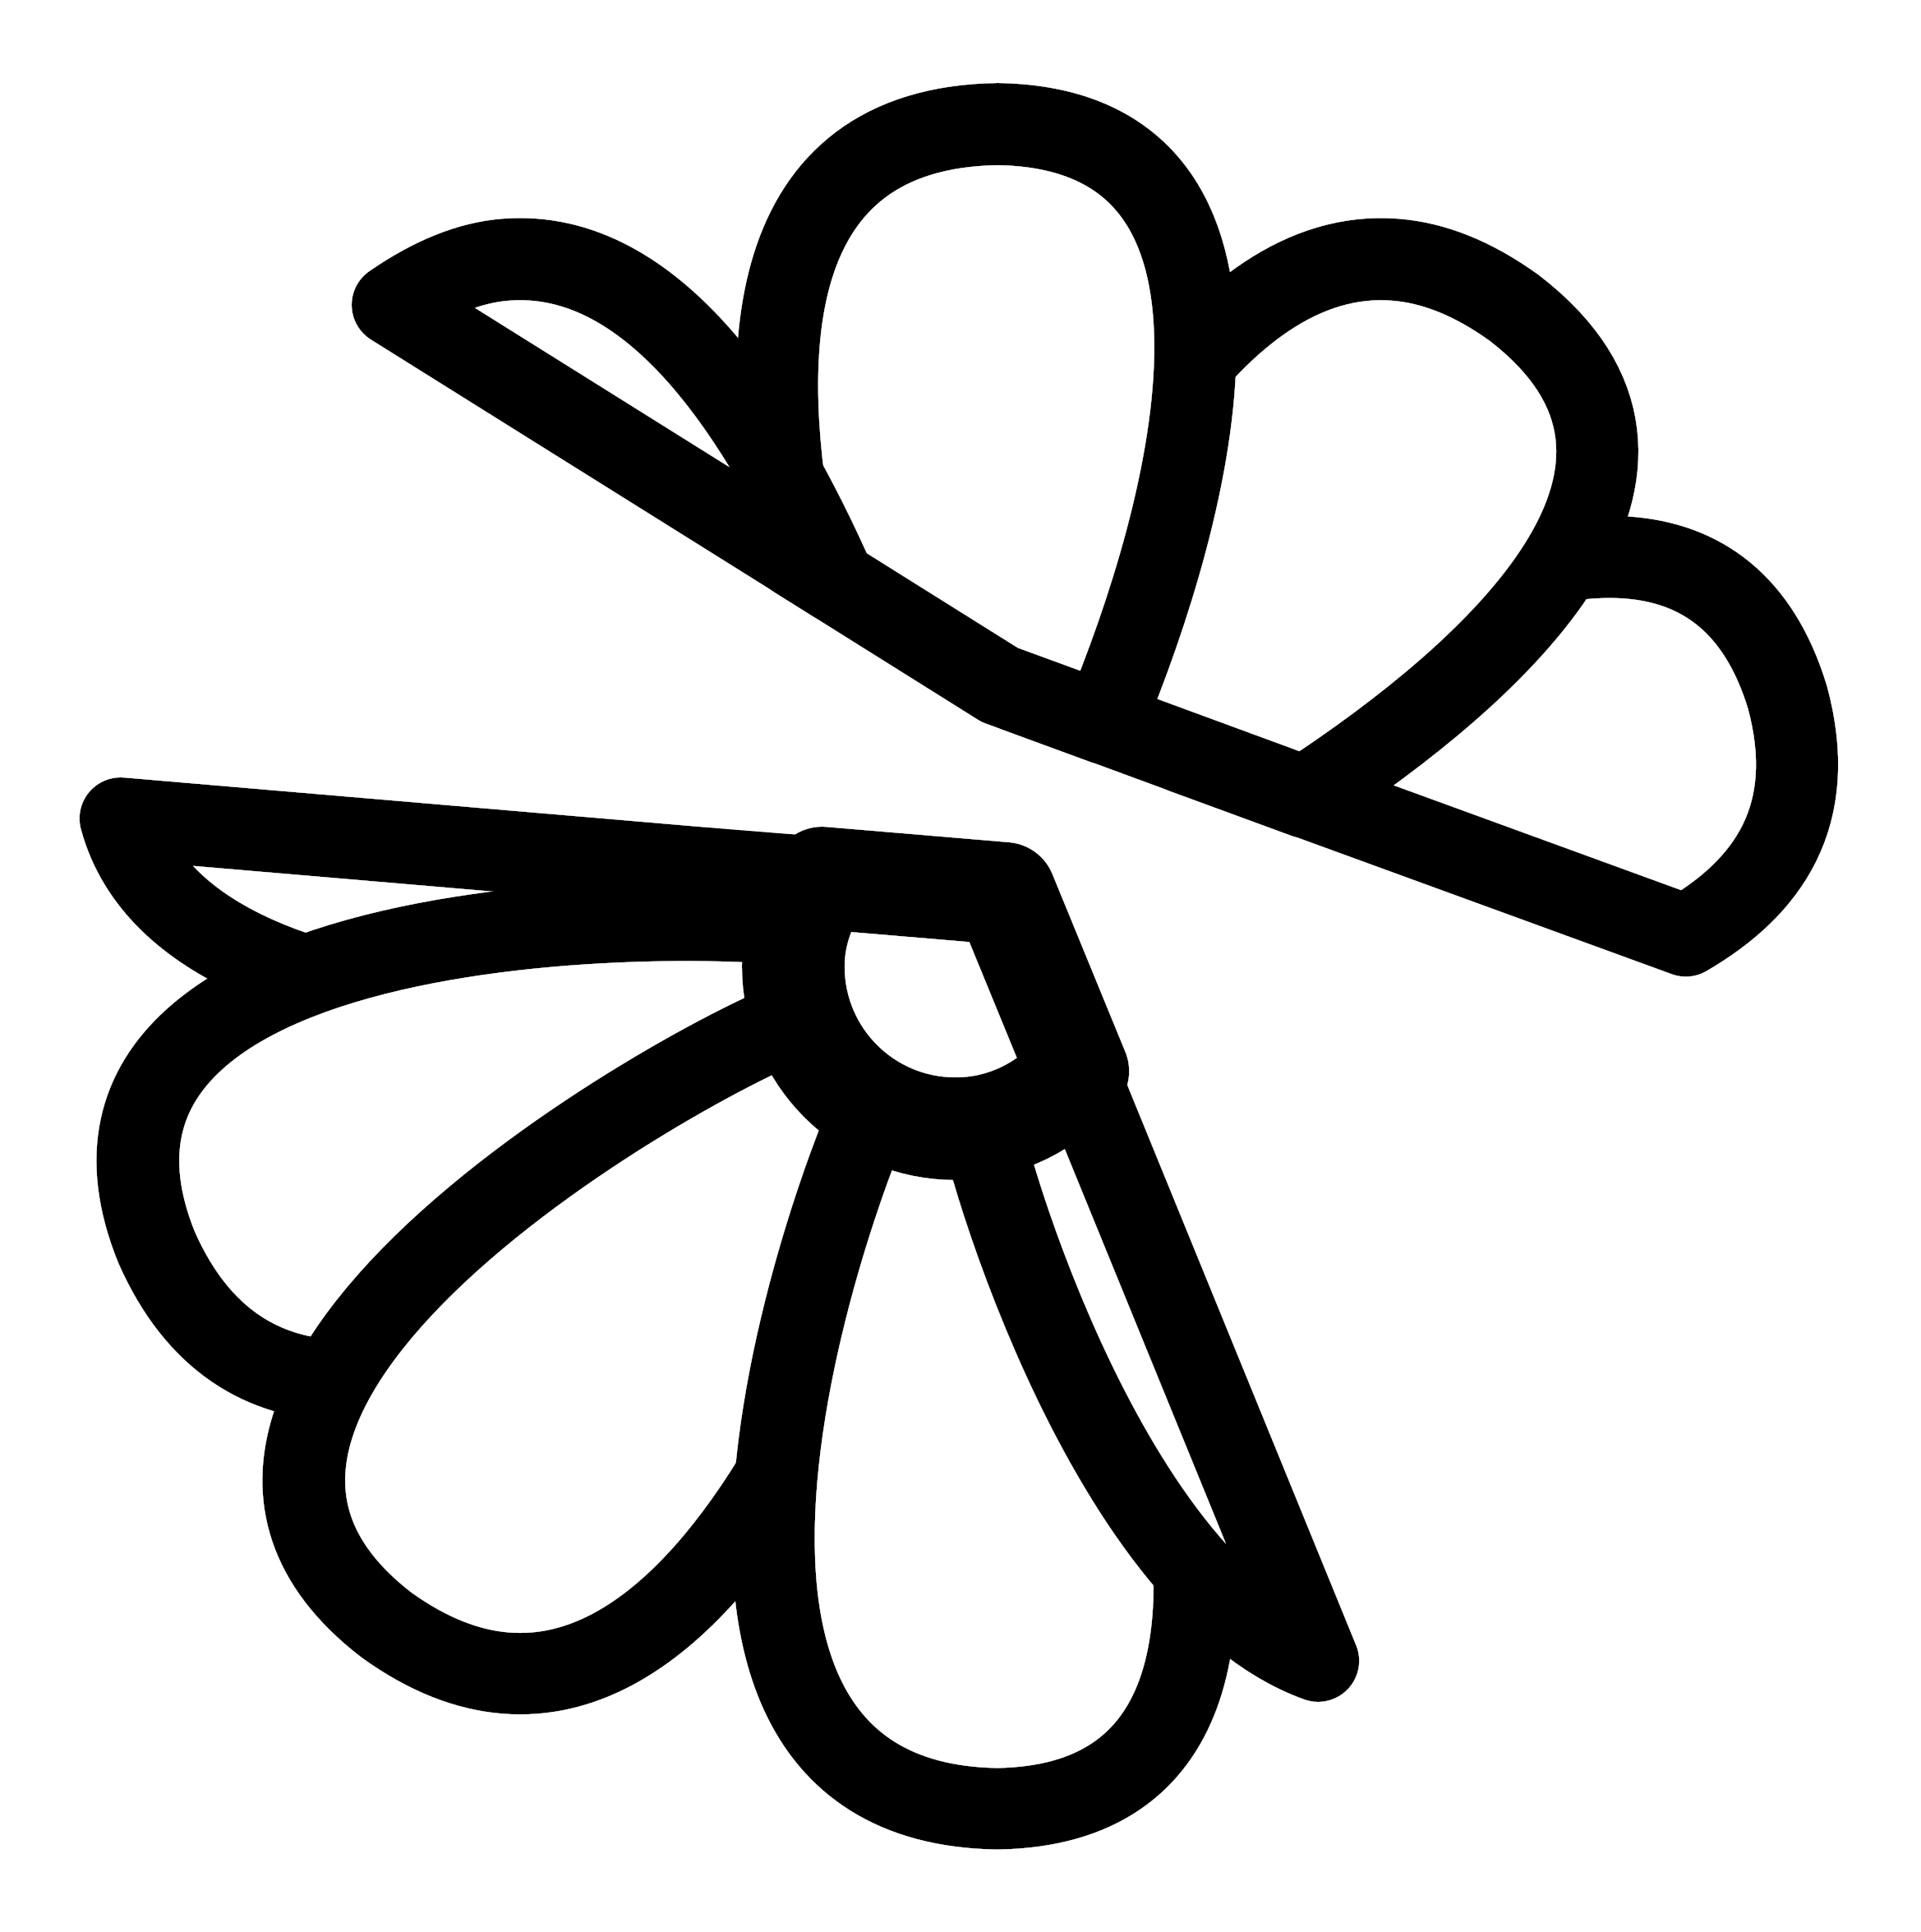 ICQ Logo PNG Images